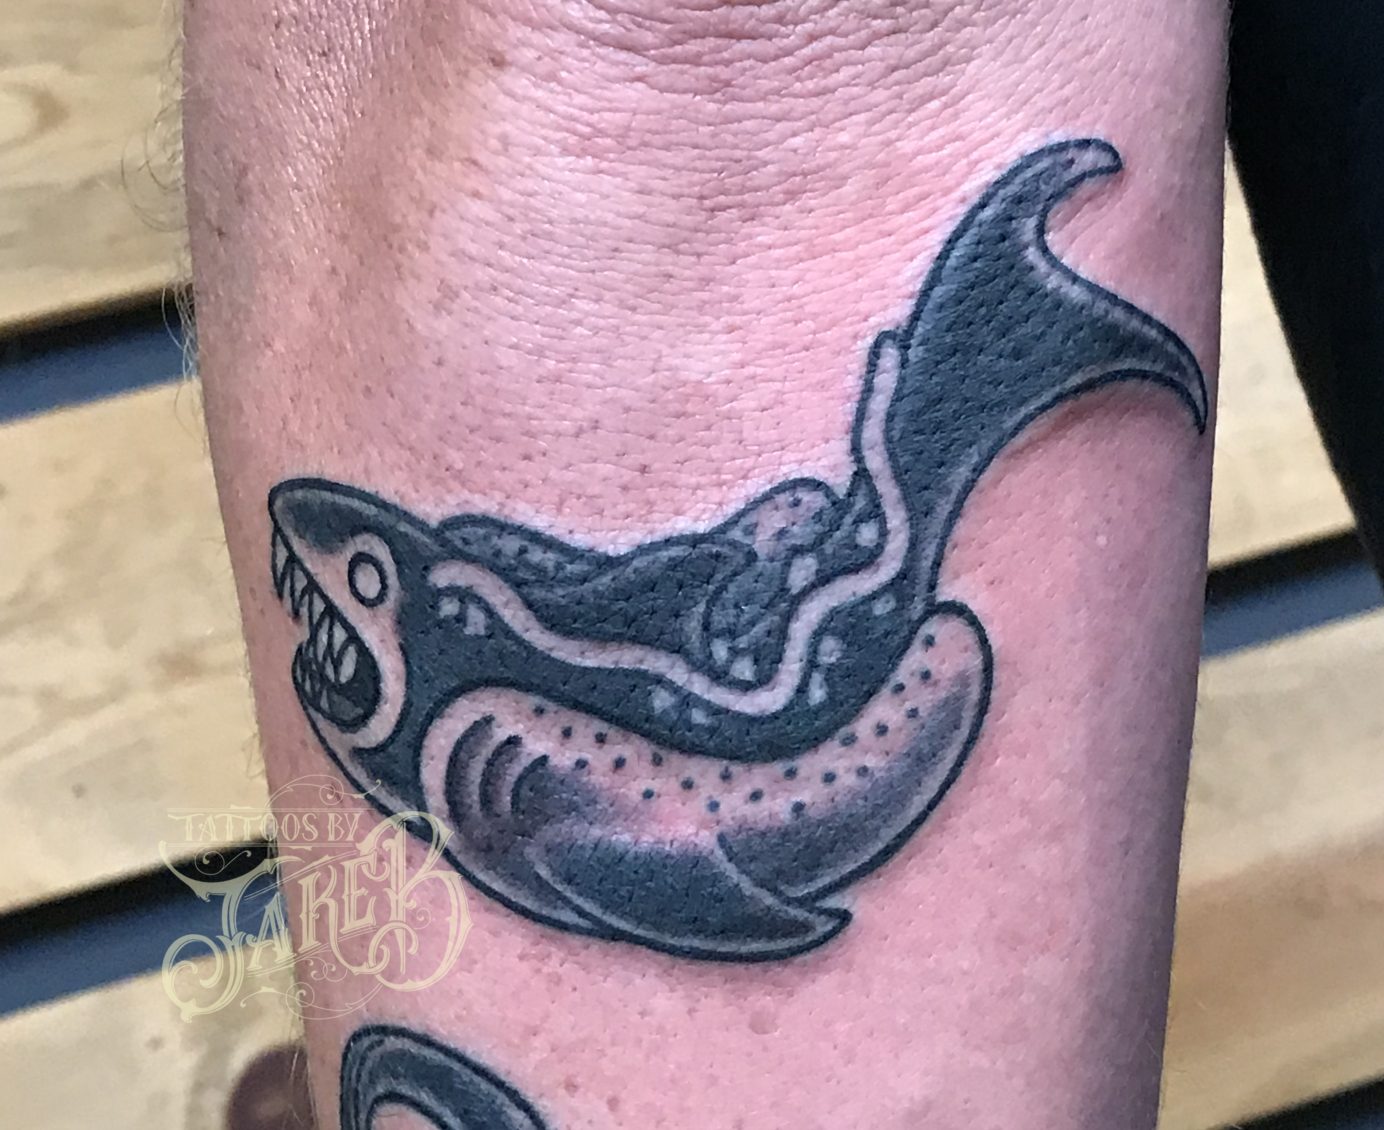 traditional hot dog shark tattoo by Jake B